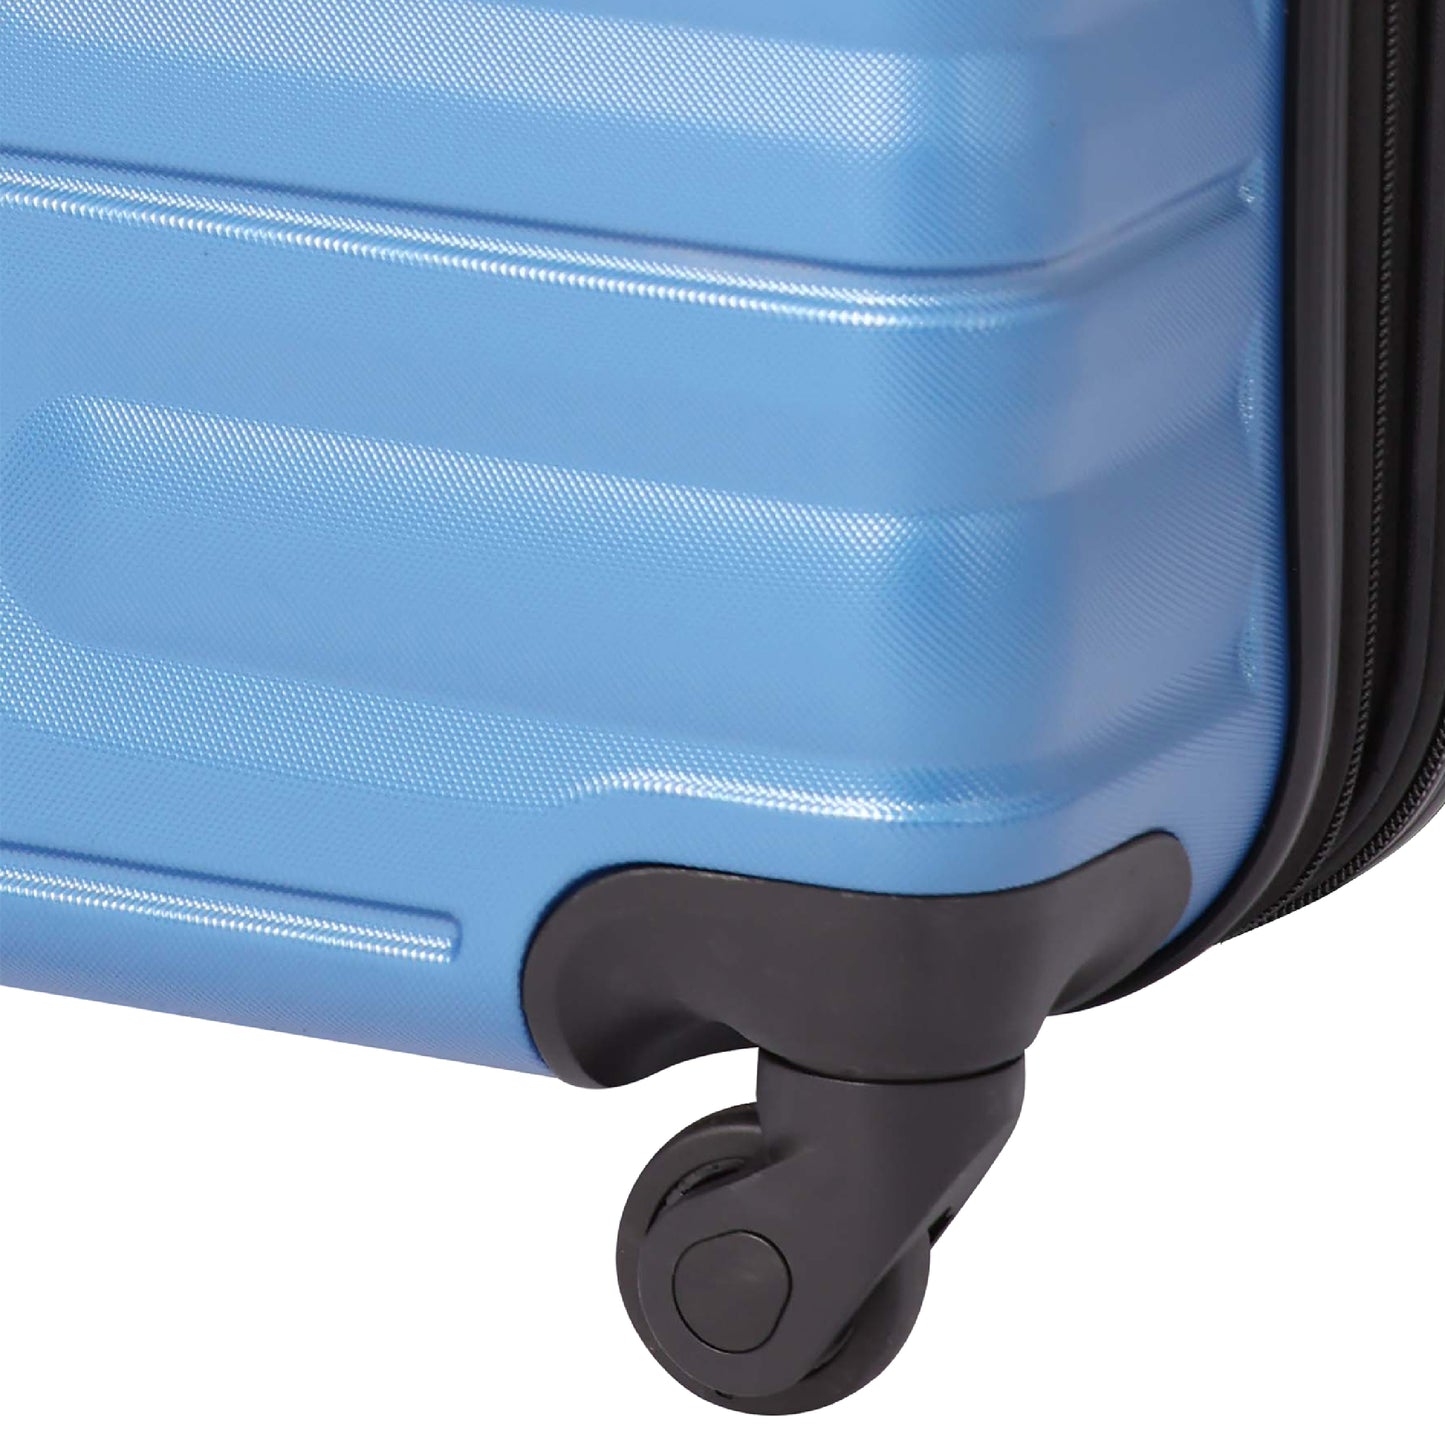 Cosmo Starline 20 Hard Luggage Trolley Case